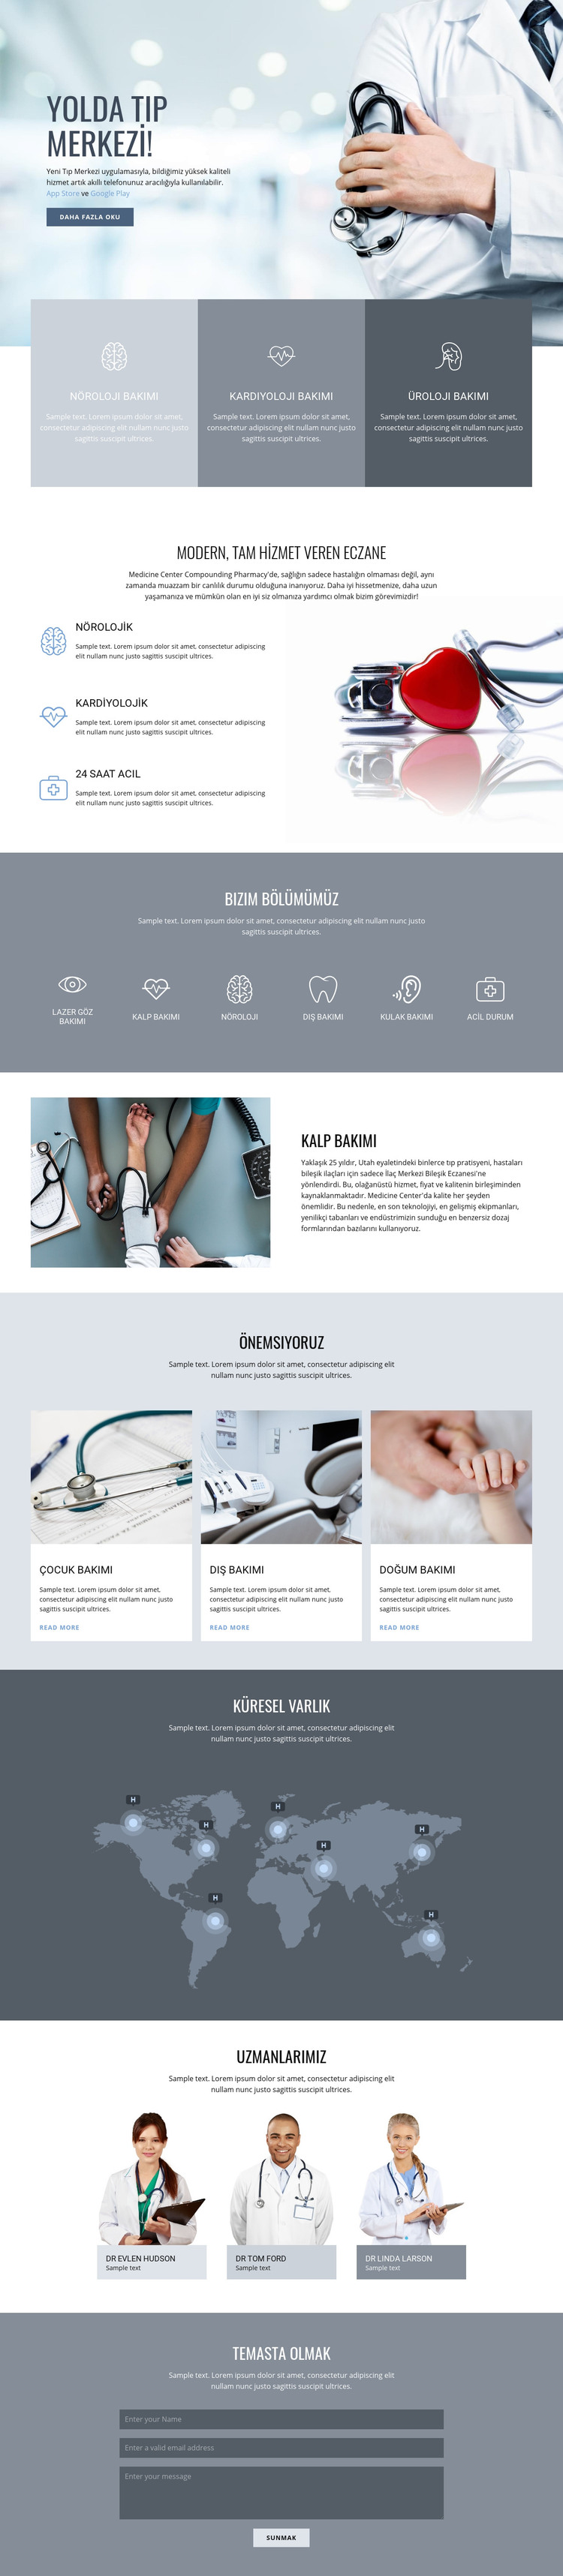 Kaliteli tıp merkezi HTML Şablonu